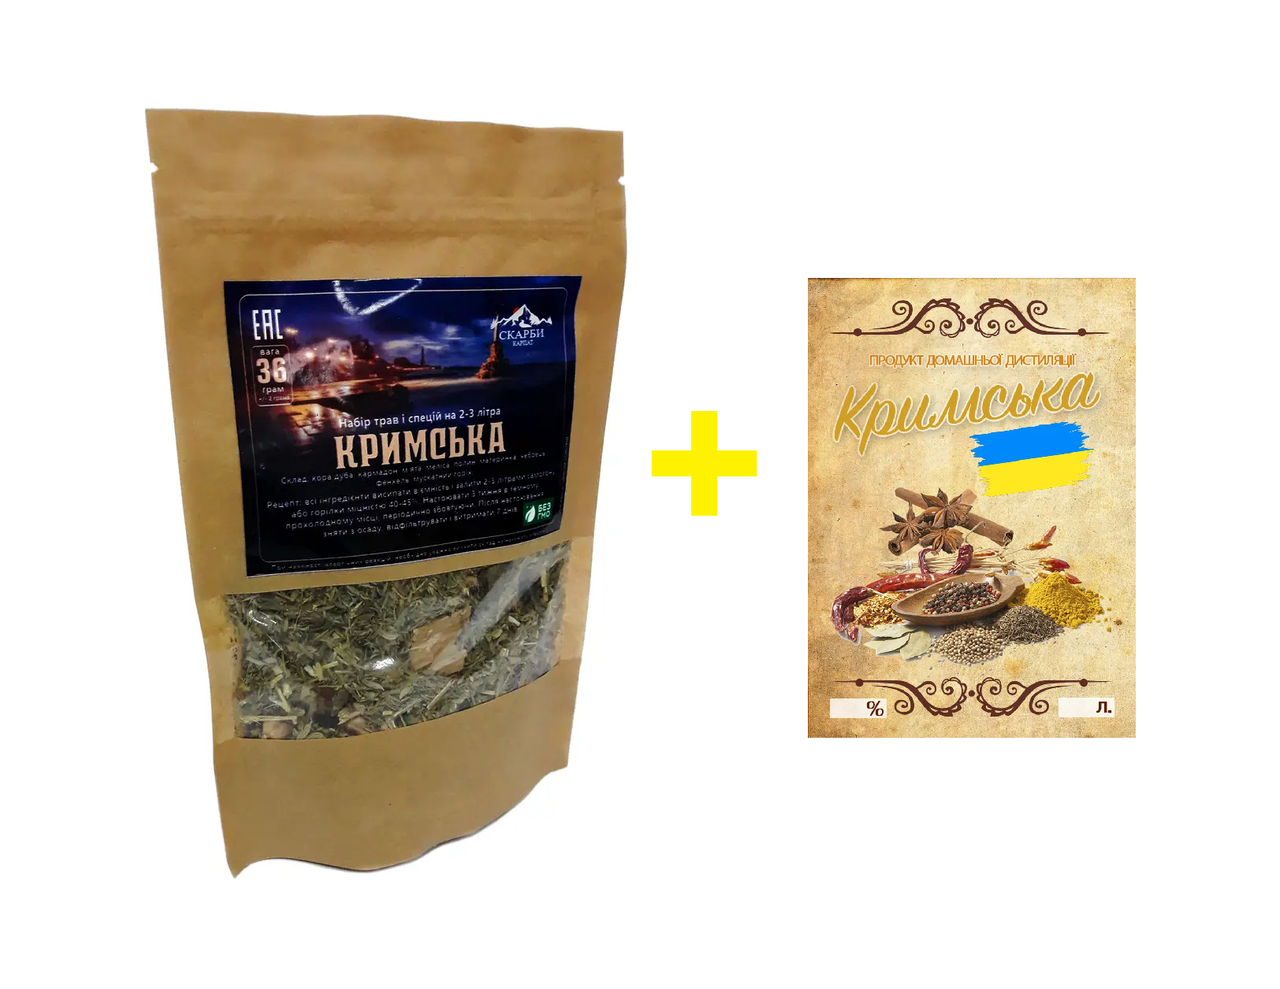 Набір «Кримська» ароматна(2-3л.) + наклейка(5 шт.) - купить в магазине BrewTime по цене 99 грн.